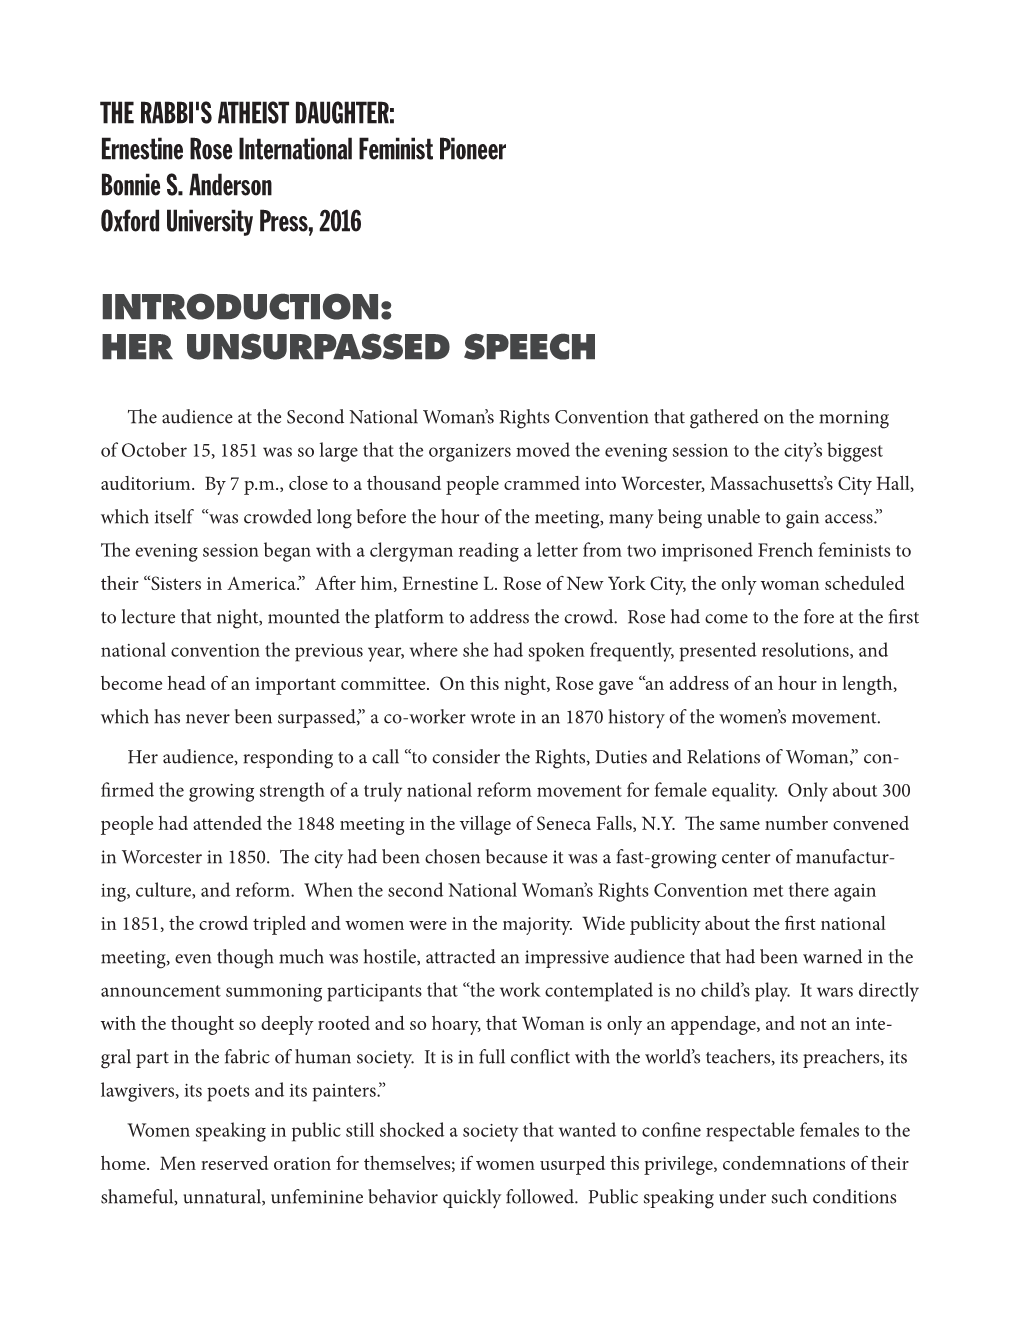 Introduction: Her Unsurpassed Speech